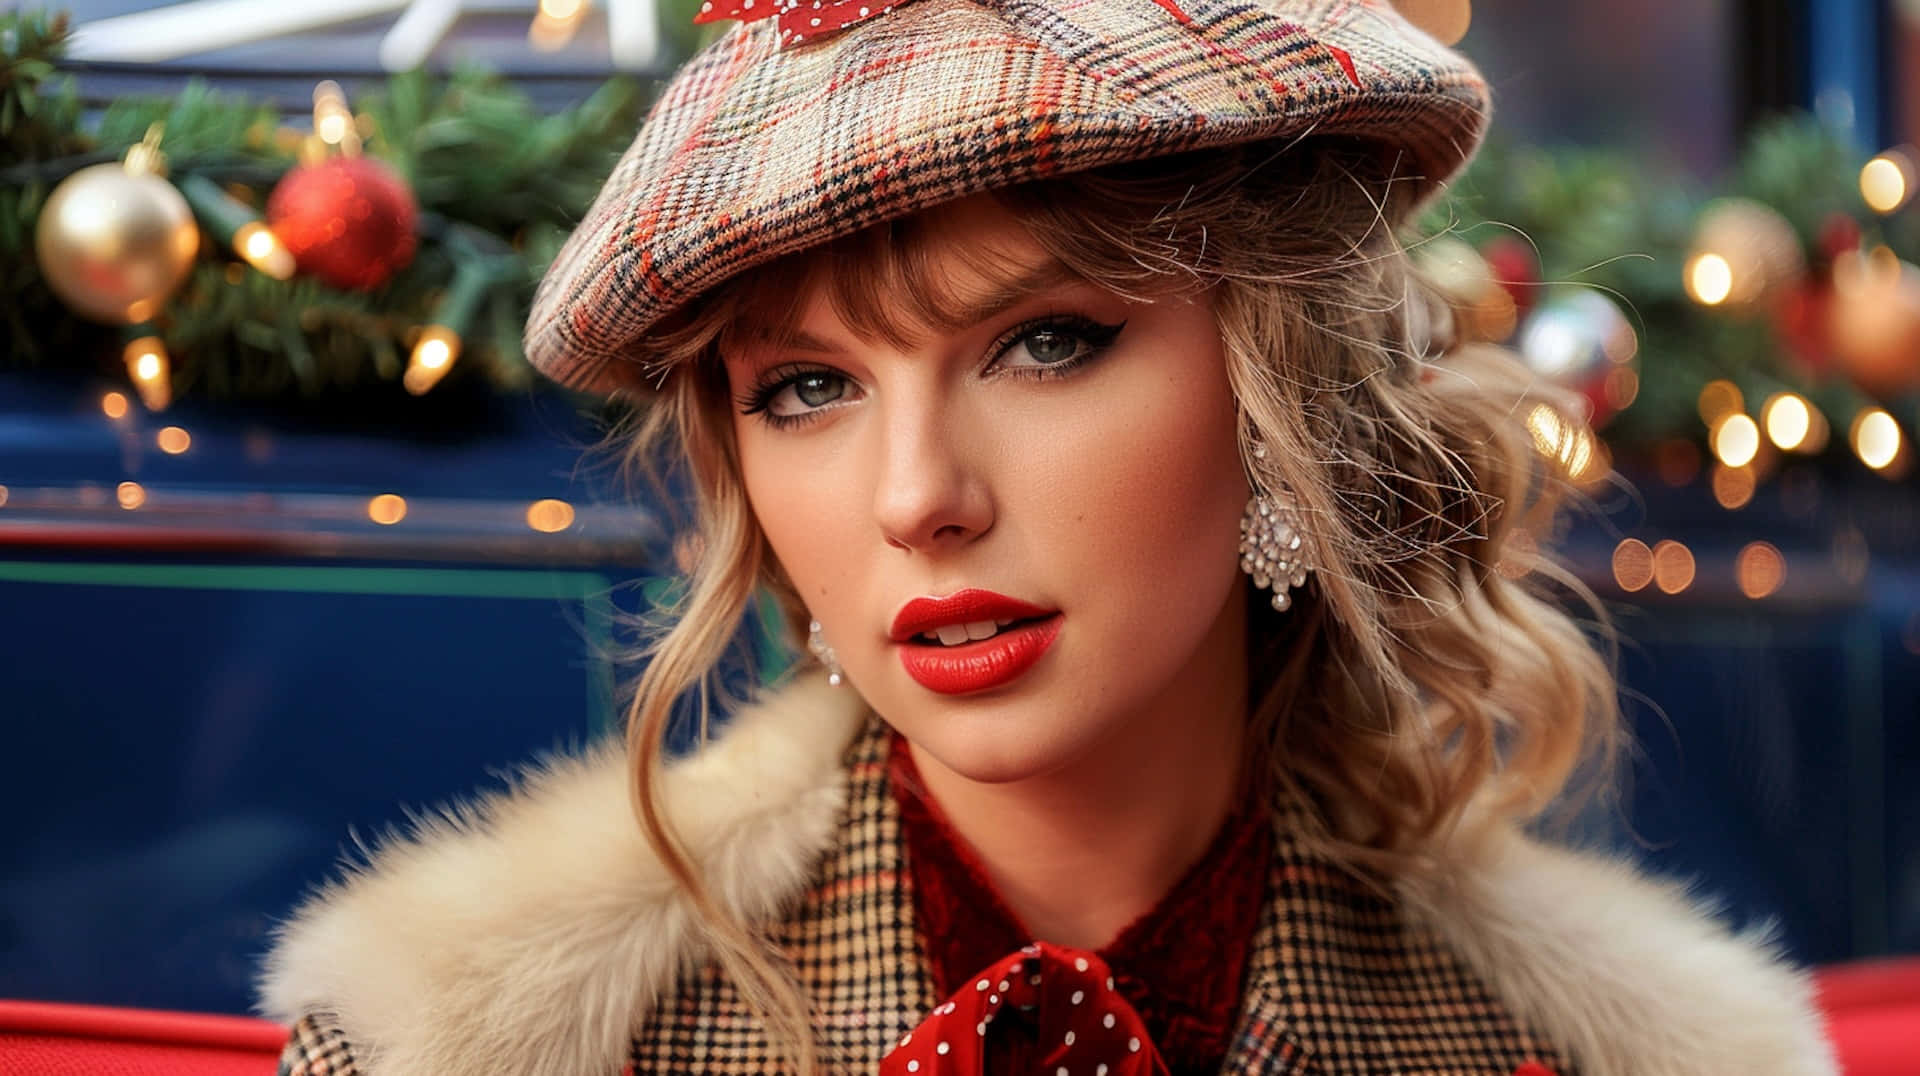 Festive Winter Fashion Taylor Swift Wallpaper